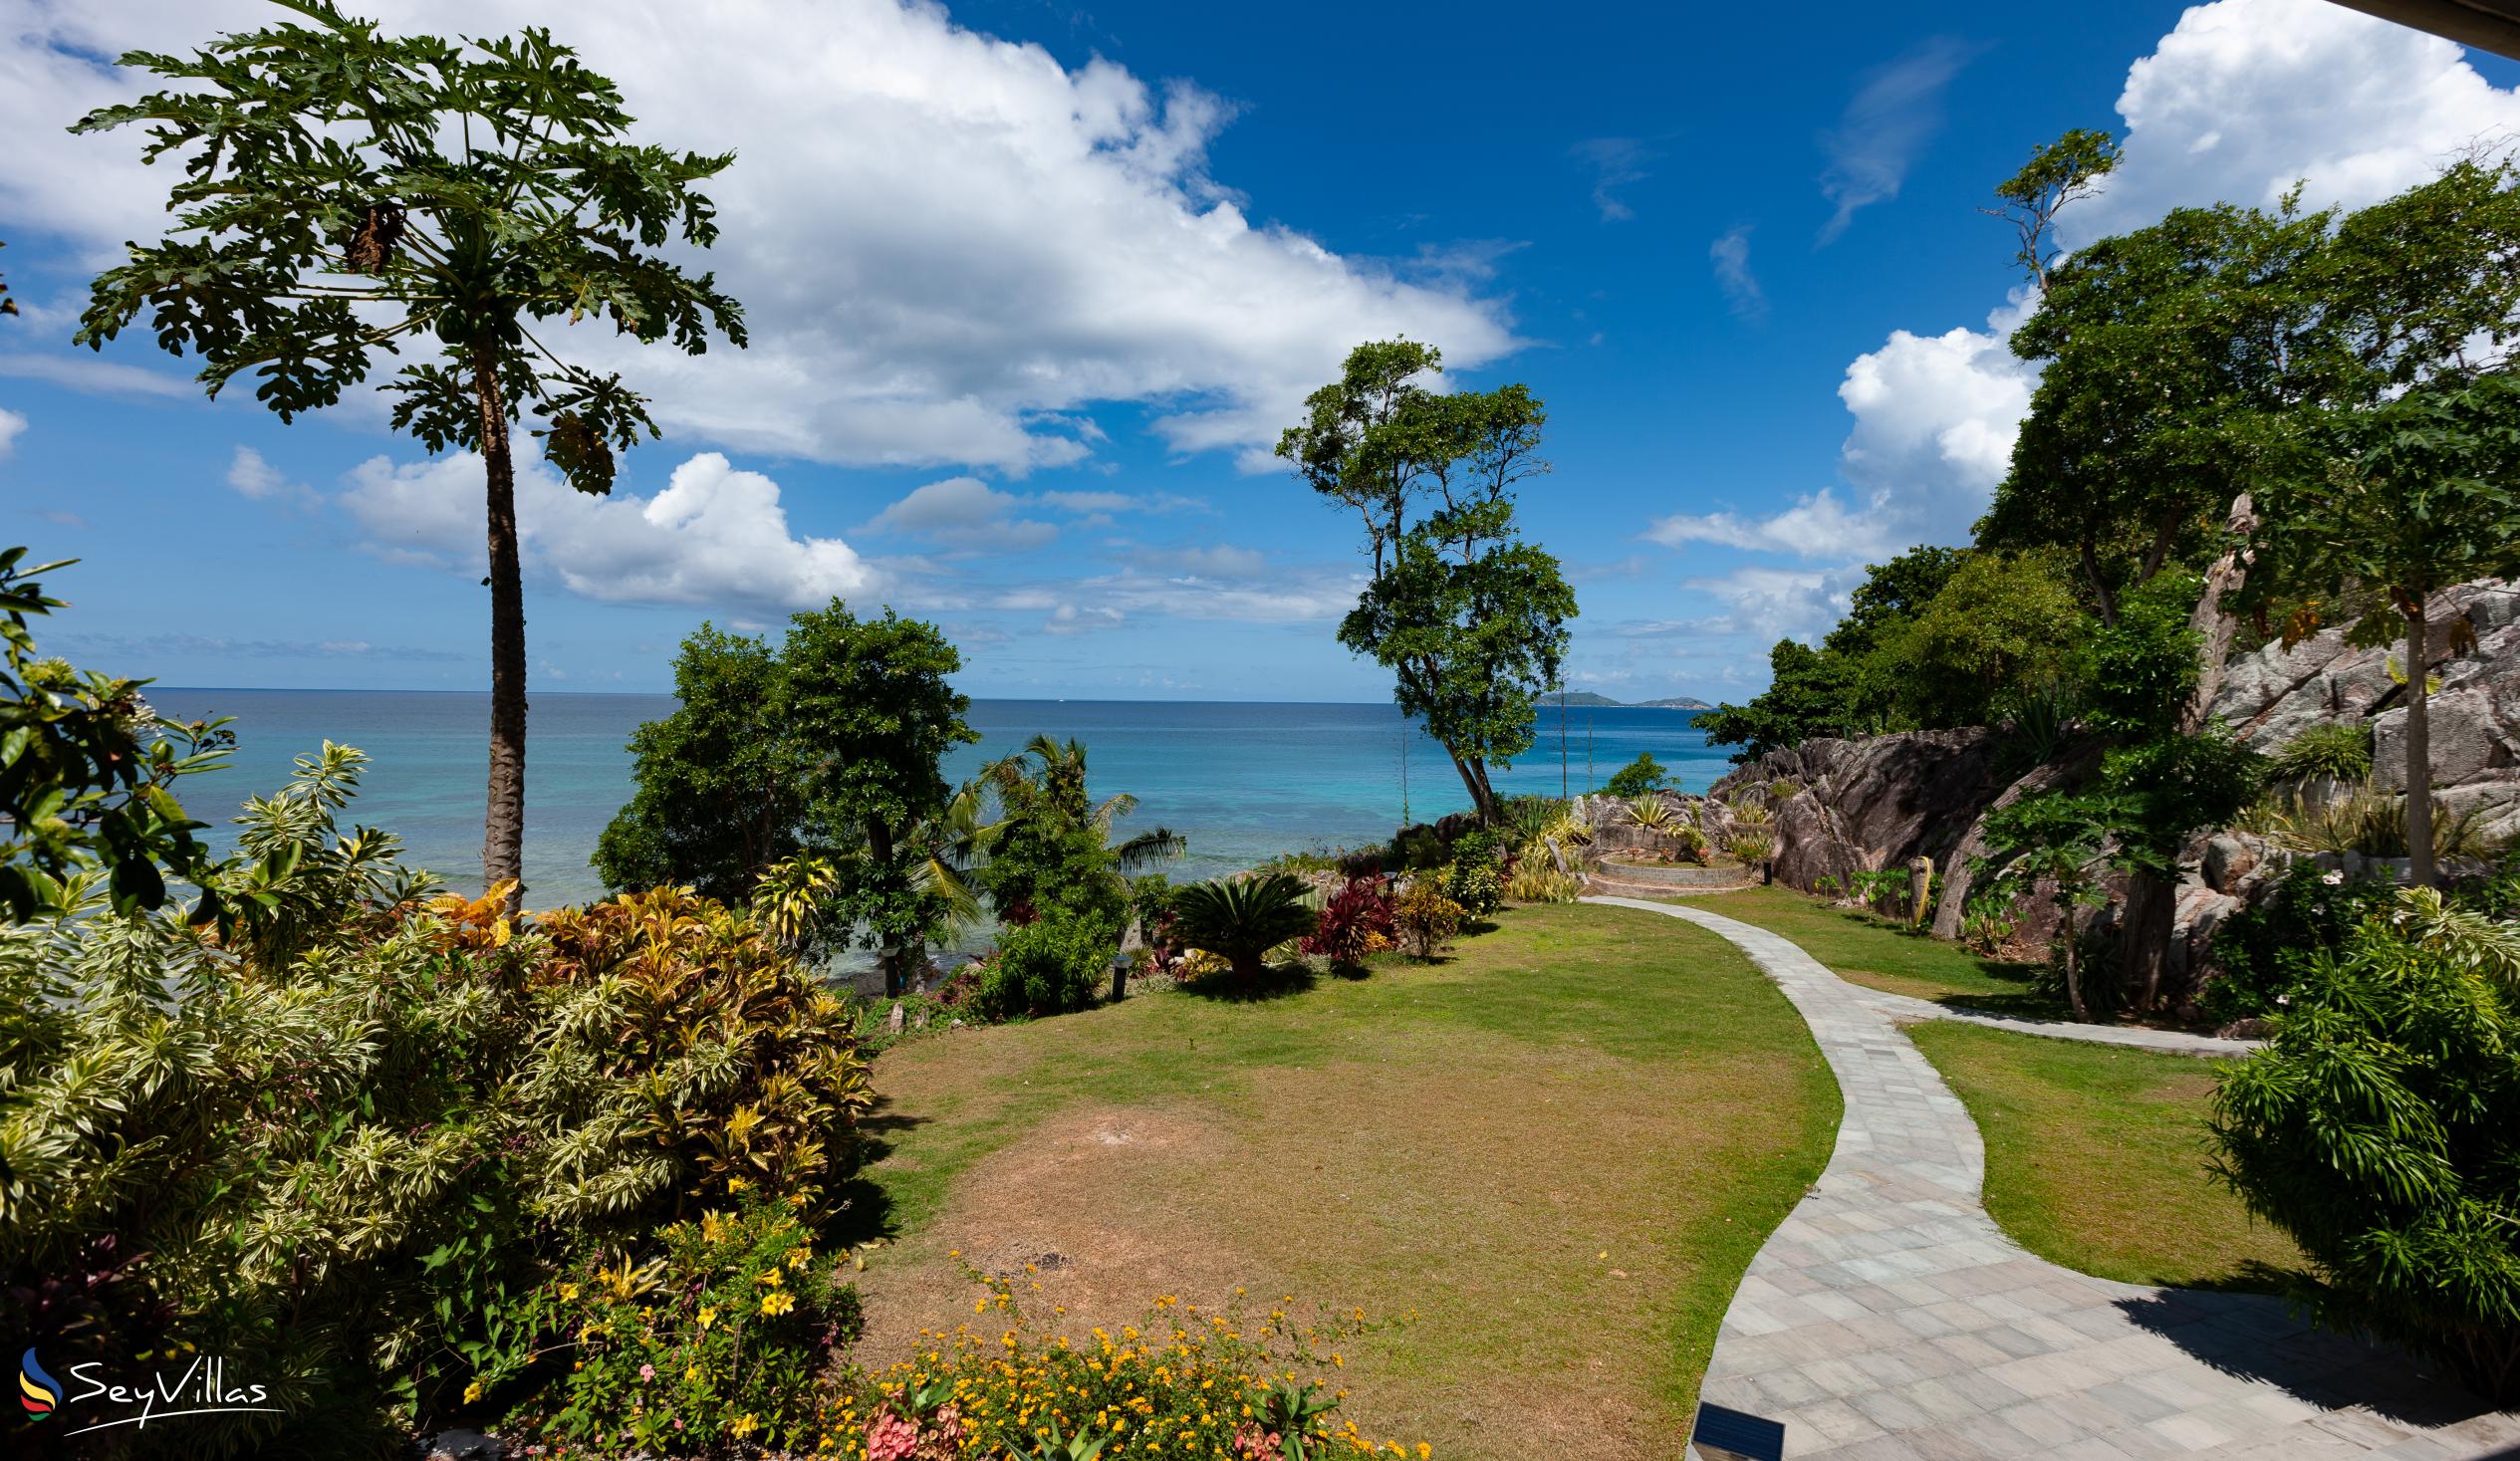 Photo 3: Cote Mer Villa - Outdoor area - Praslin (Seychelles)